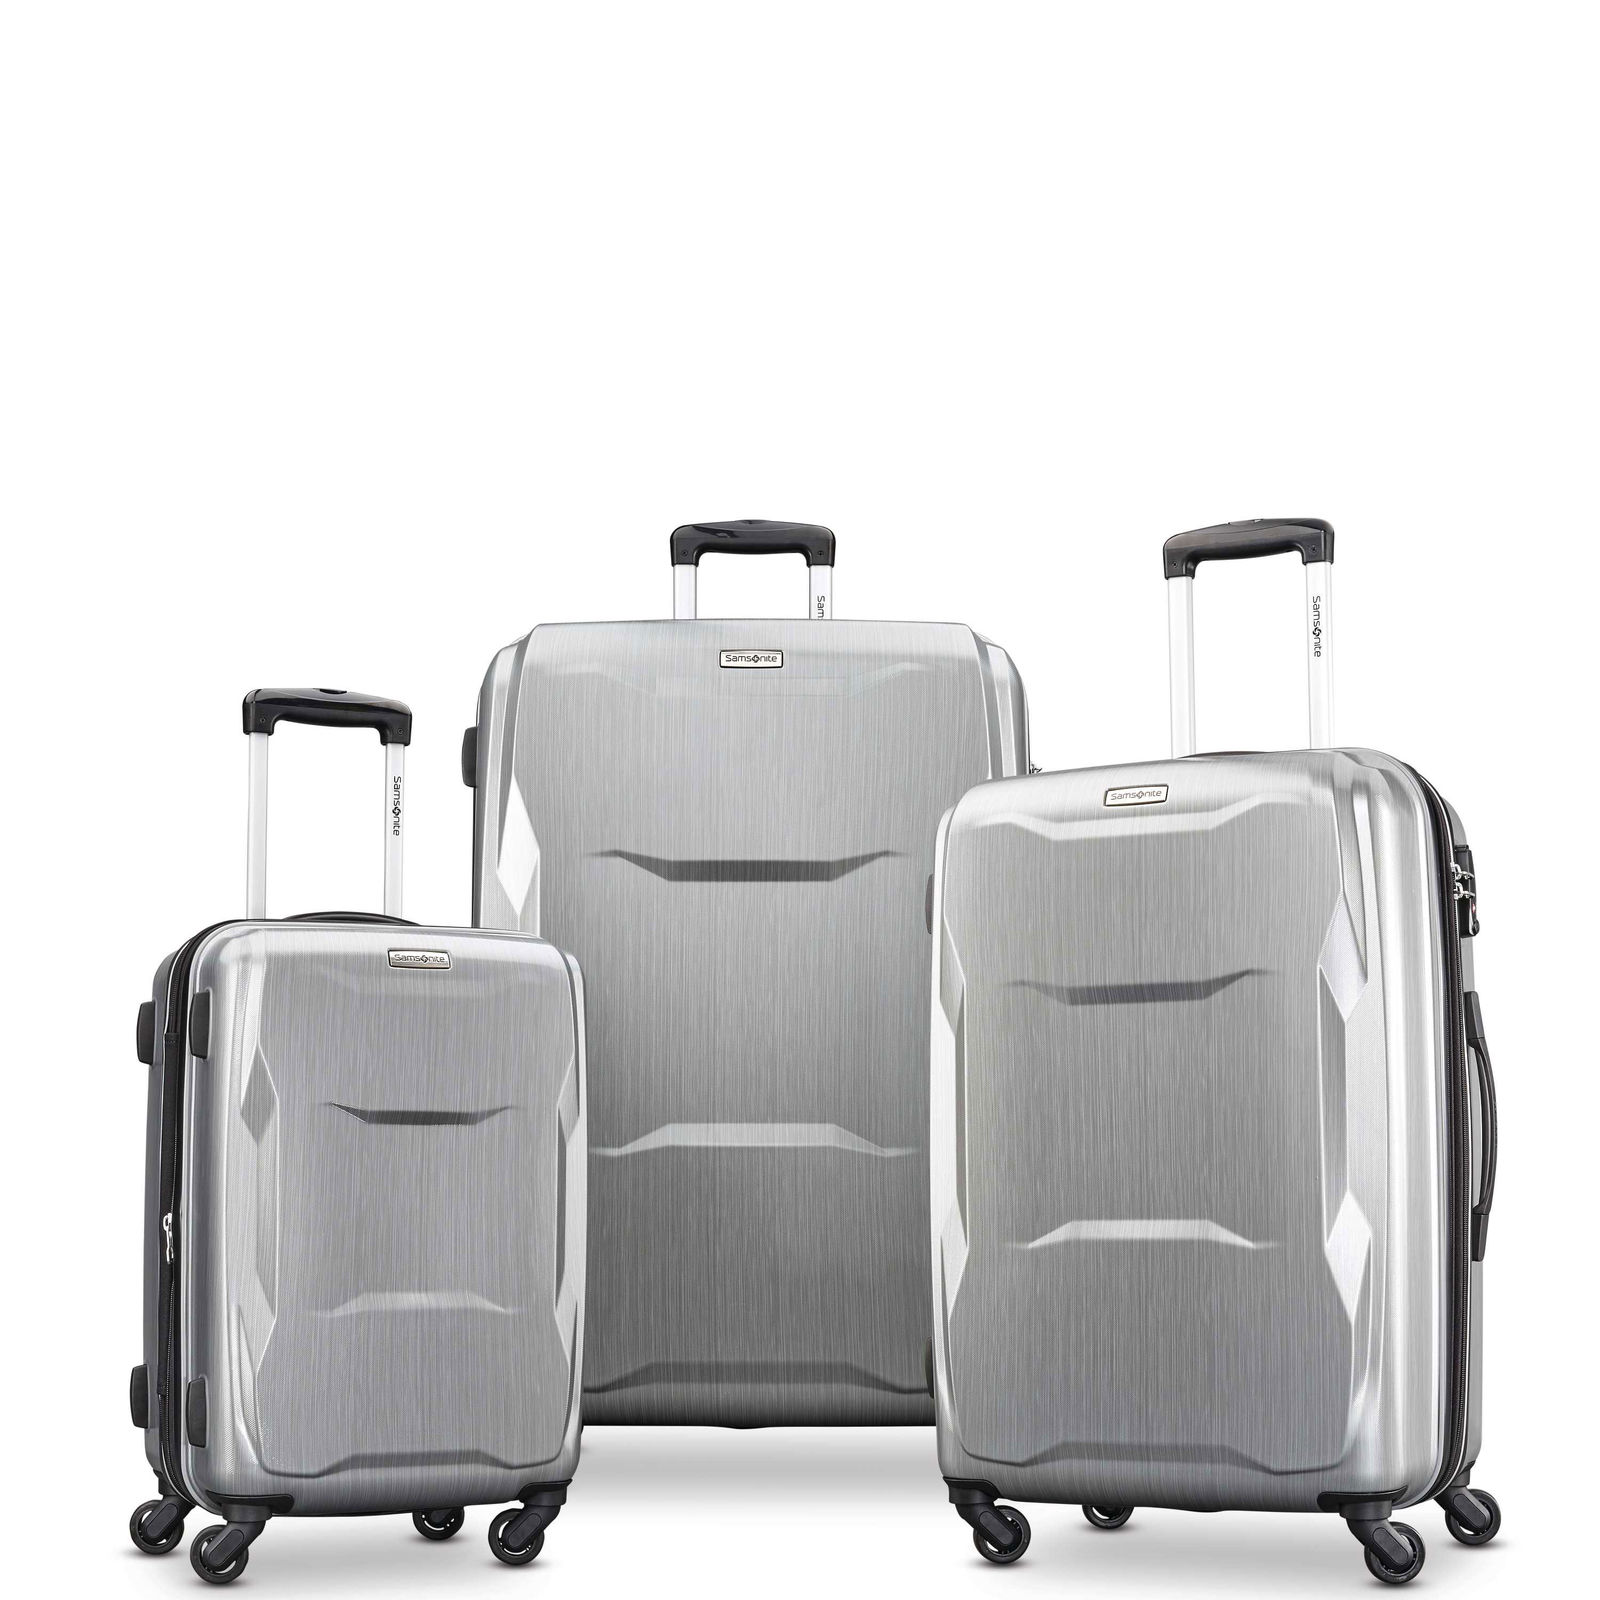 Vali Samsonite Pivot 3 Piece Set - Luggage